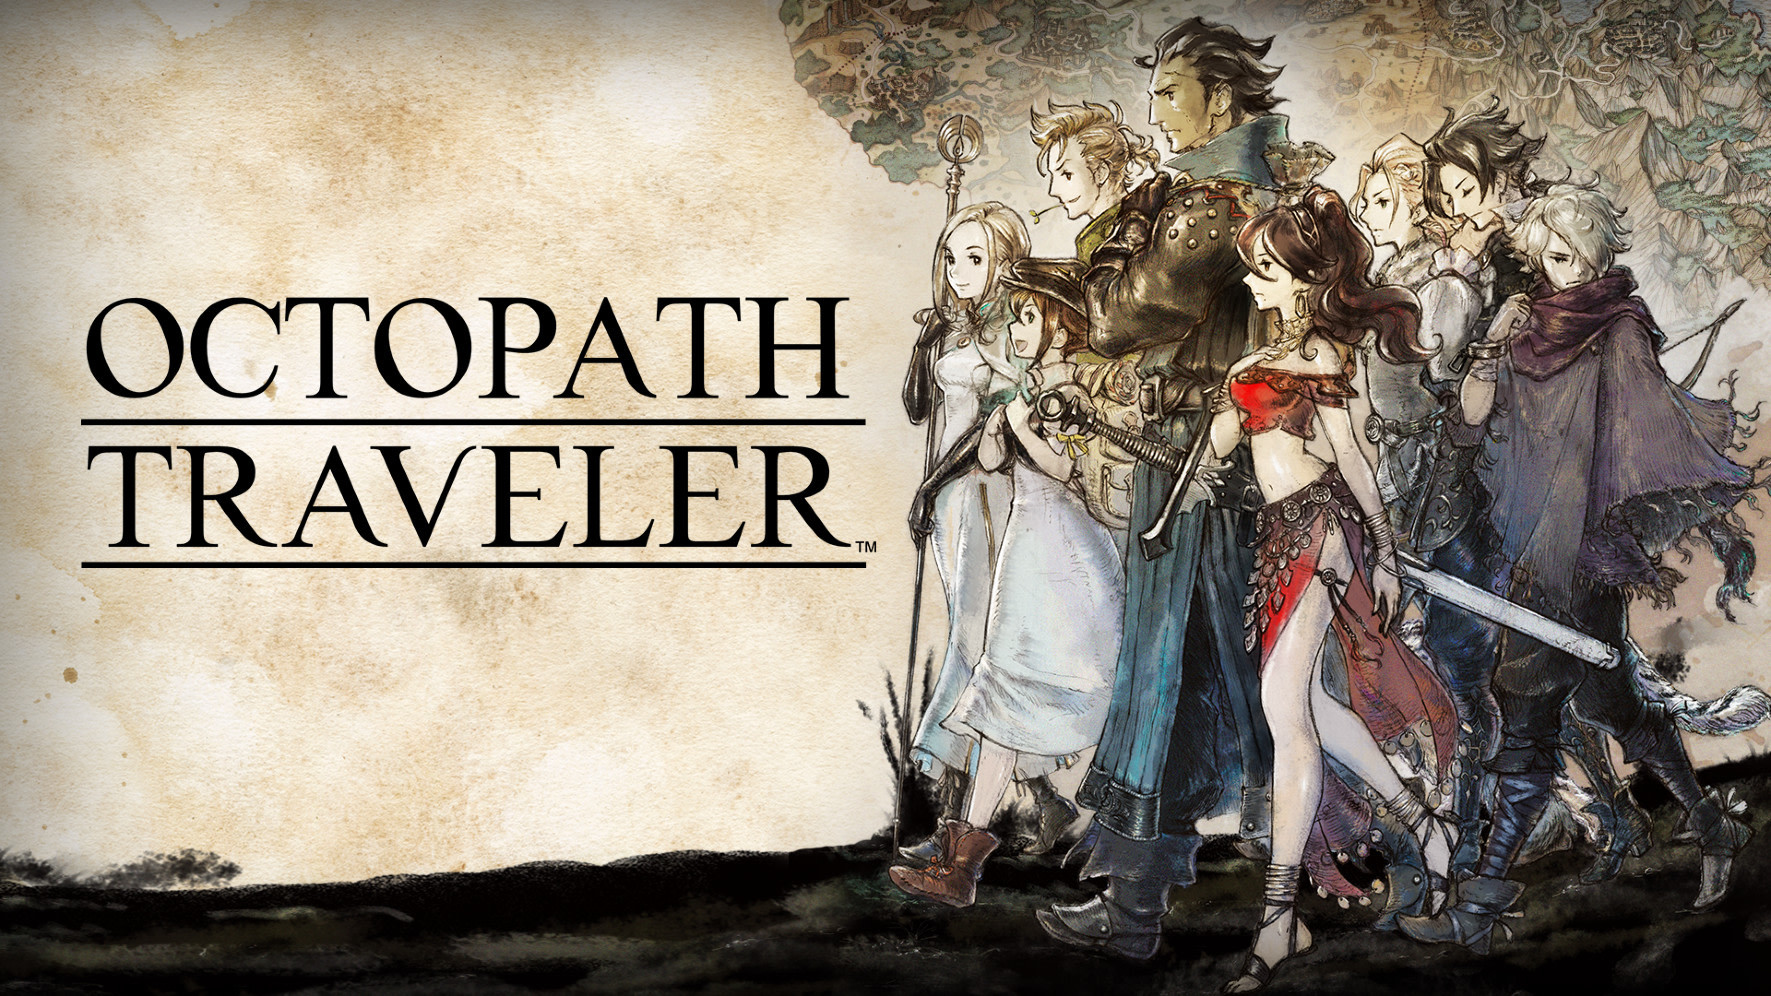 download free octopath traveler ii